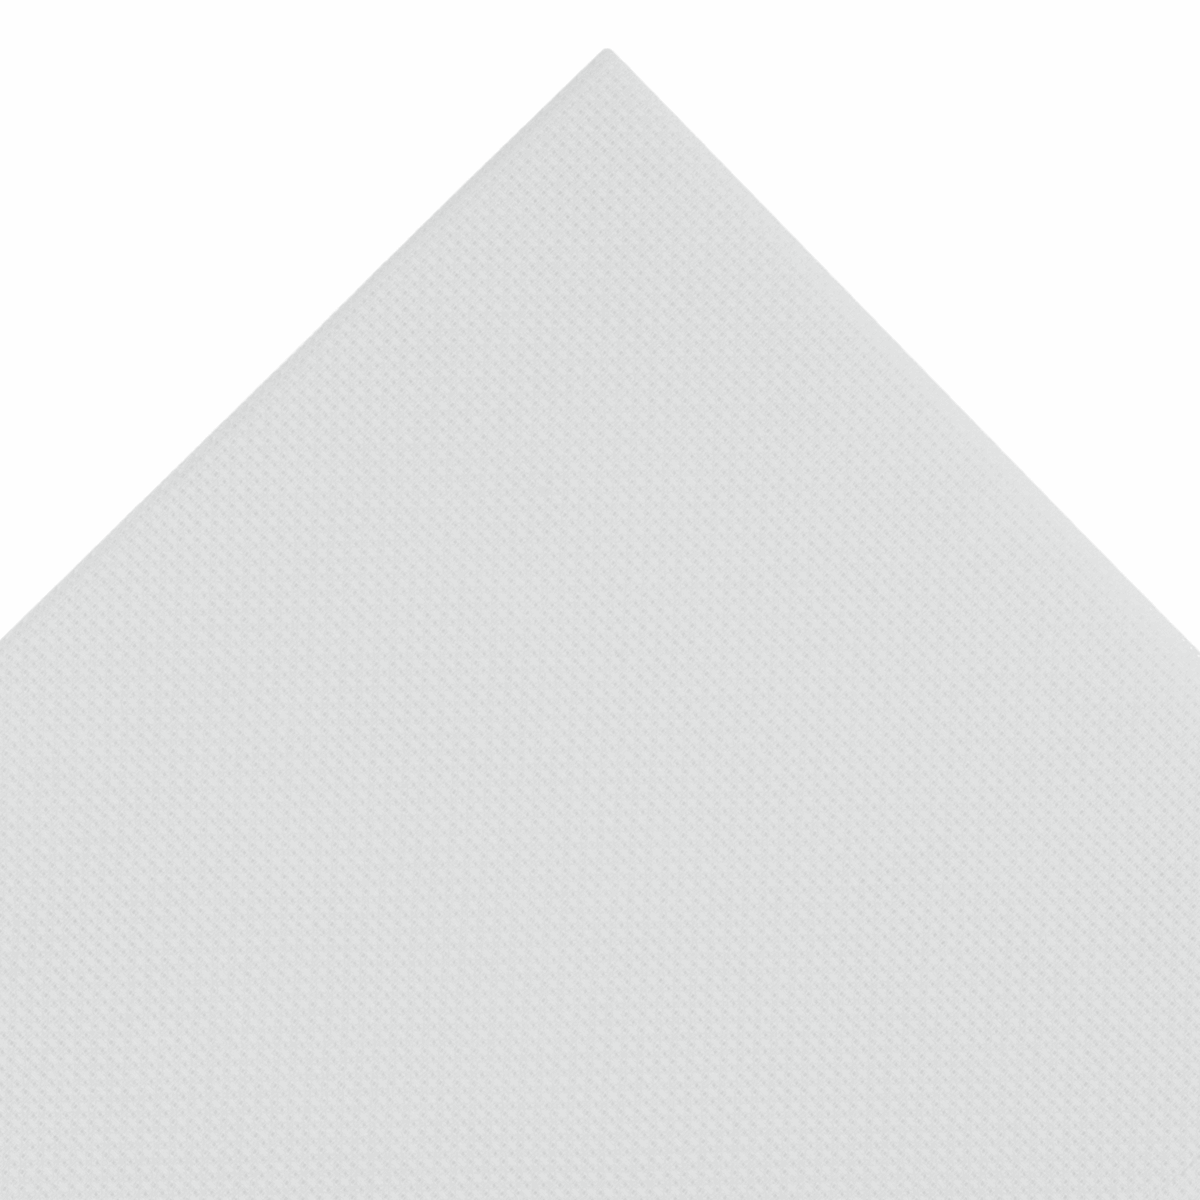 Trimits White Needlecraft Fabric - Aida 18 Count 45 x 30cm